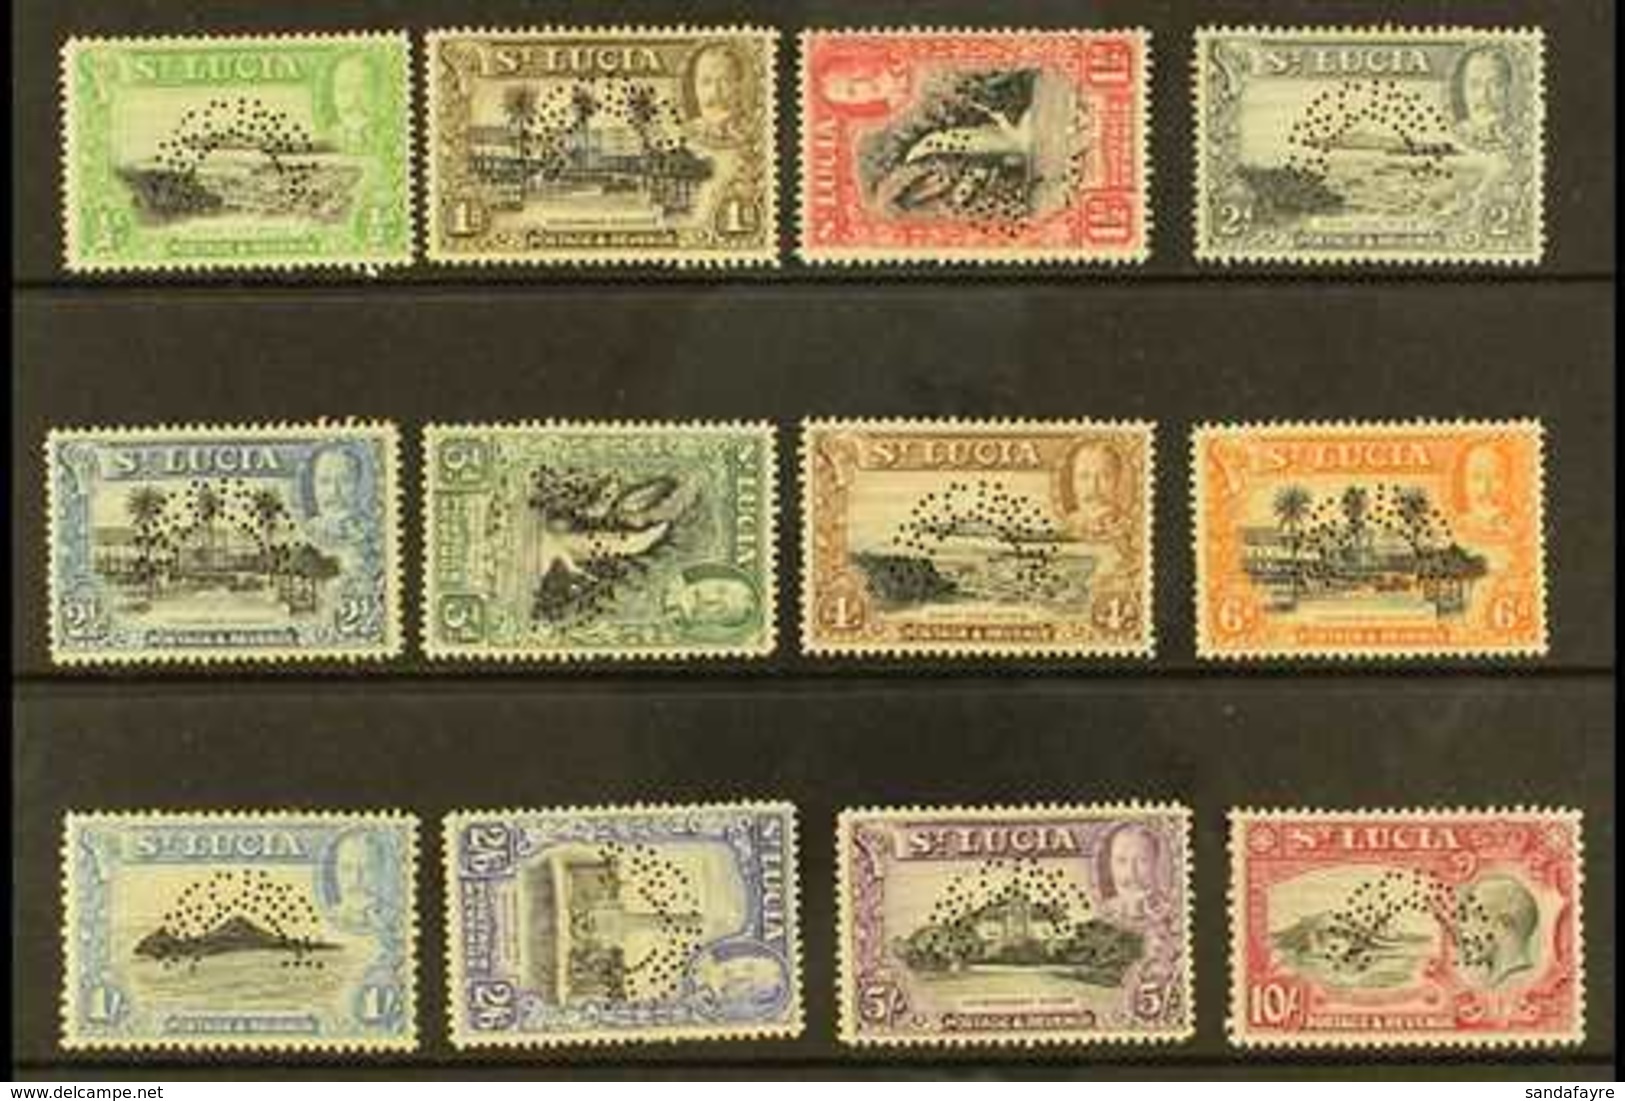 1936 Geo V Pictorial Set, Perforated "Specimen", SG 113s/24s, Fine And Fresh Mint, Large Part Og. (12 Stamps) For More I - St.Lucia (...-1978)